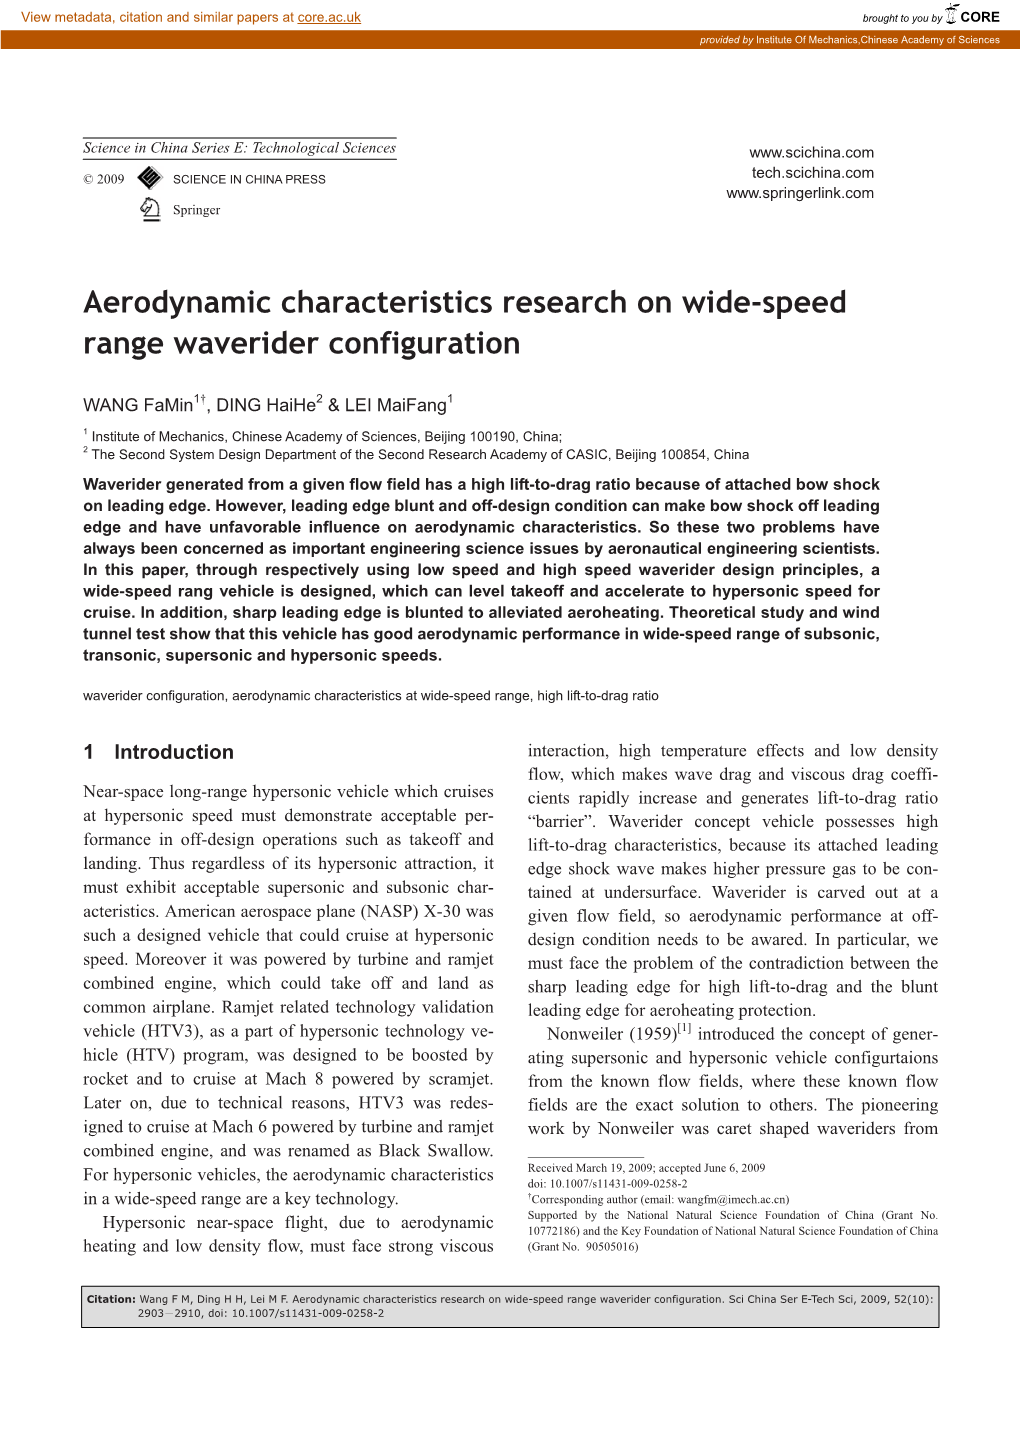 Aerodynamic Characteristics Research on Wide-Speed Range Waverider Configuration